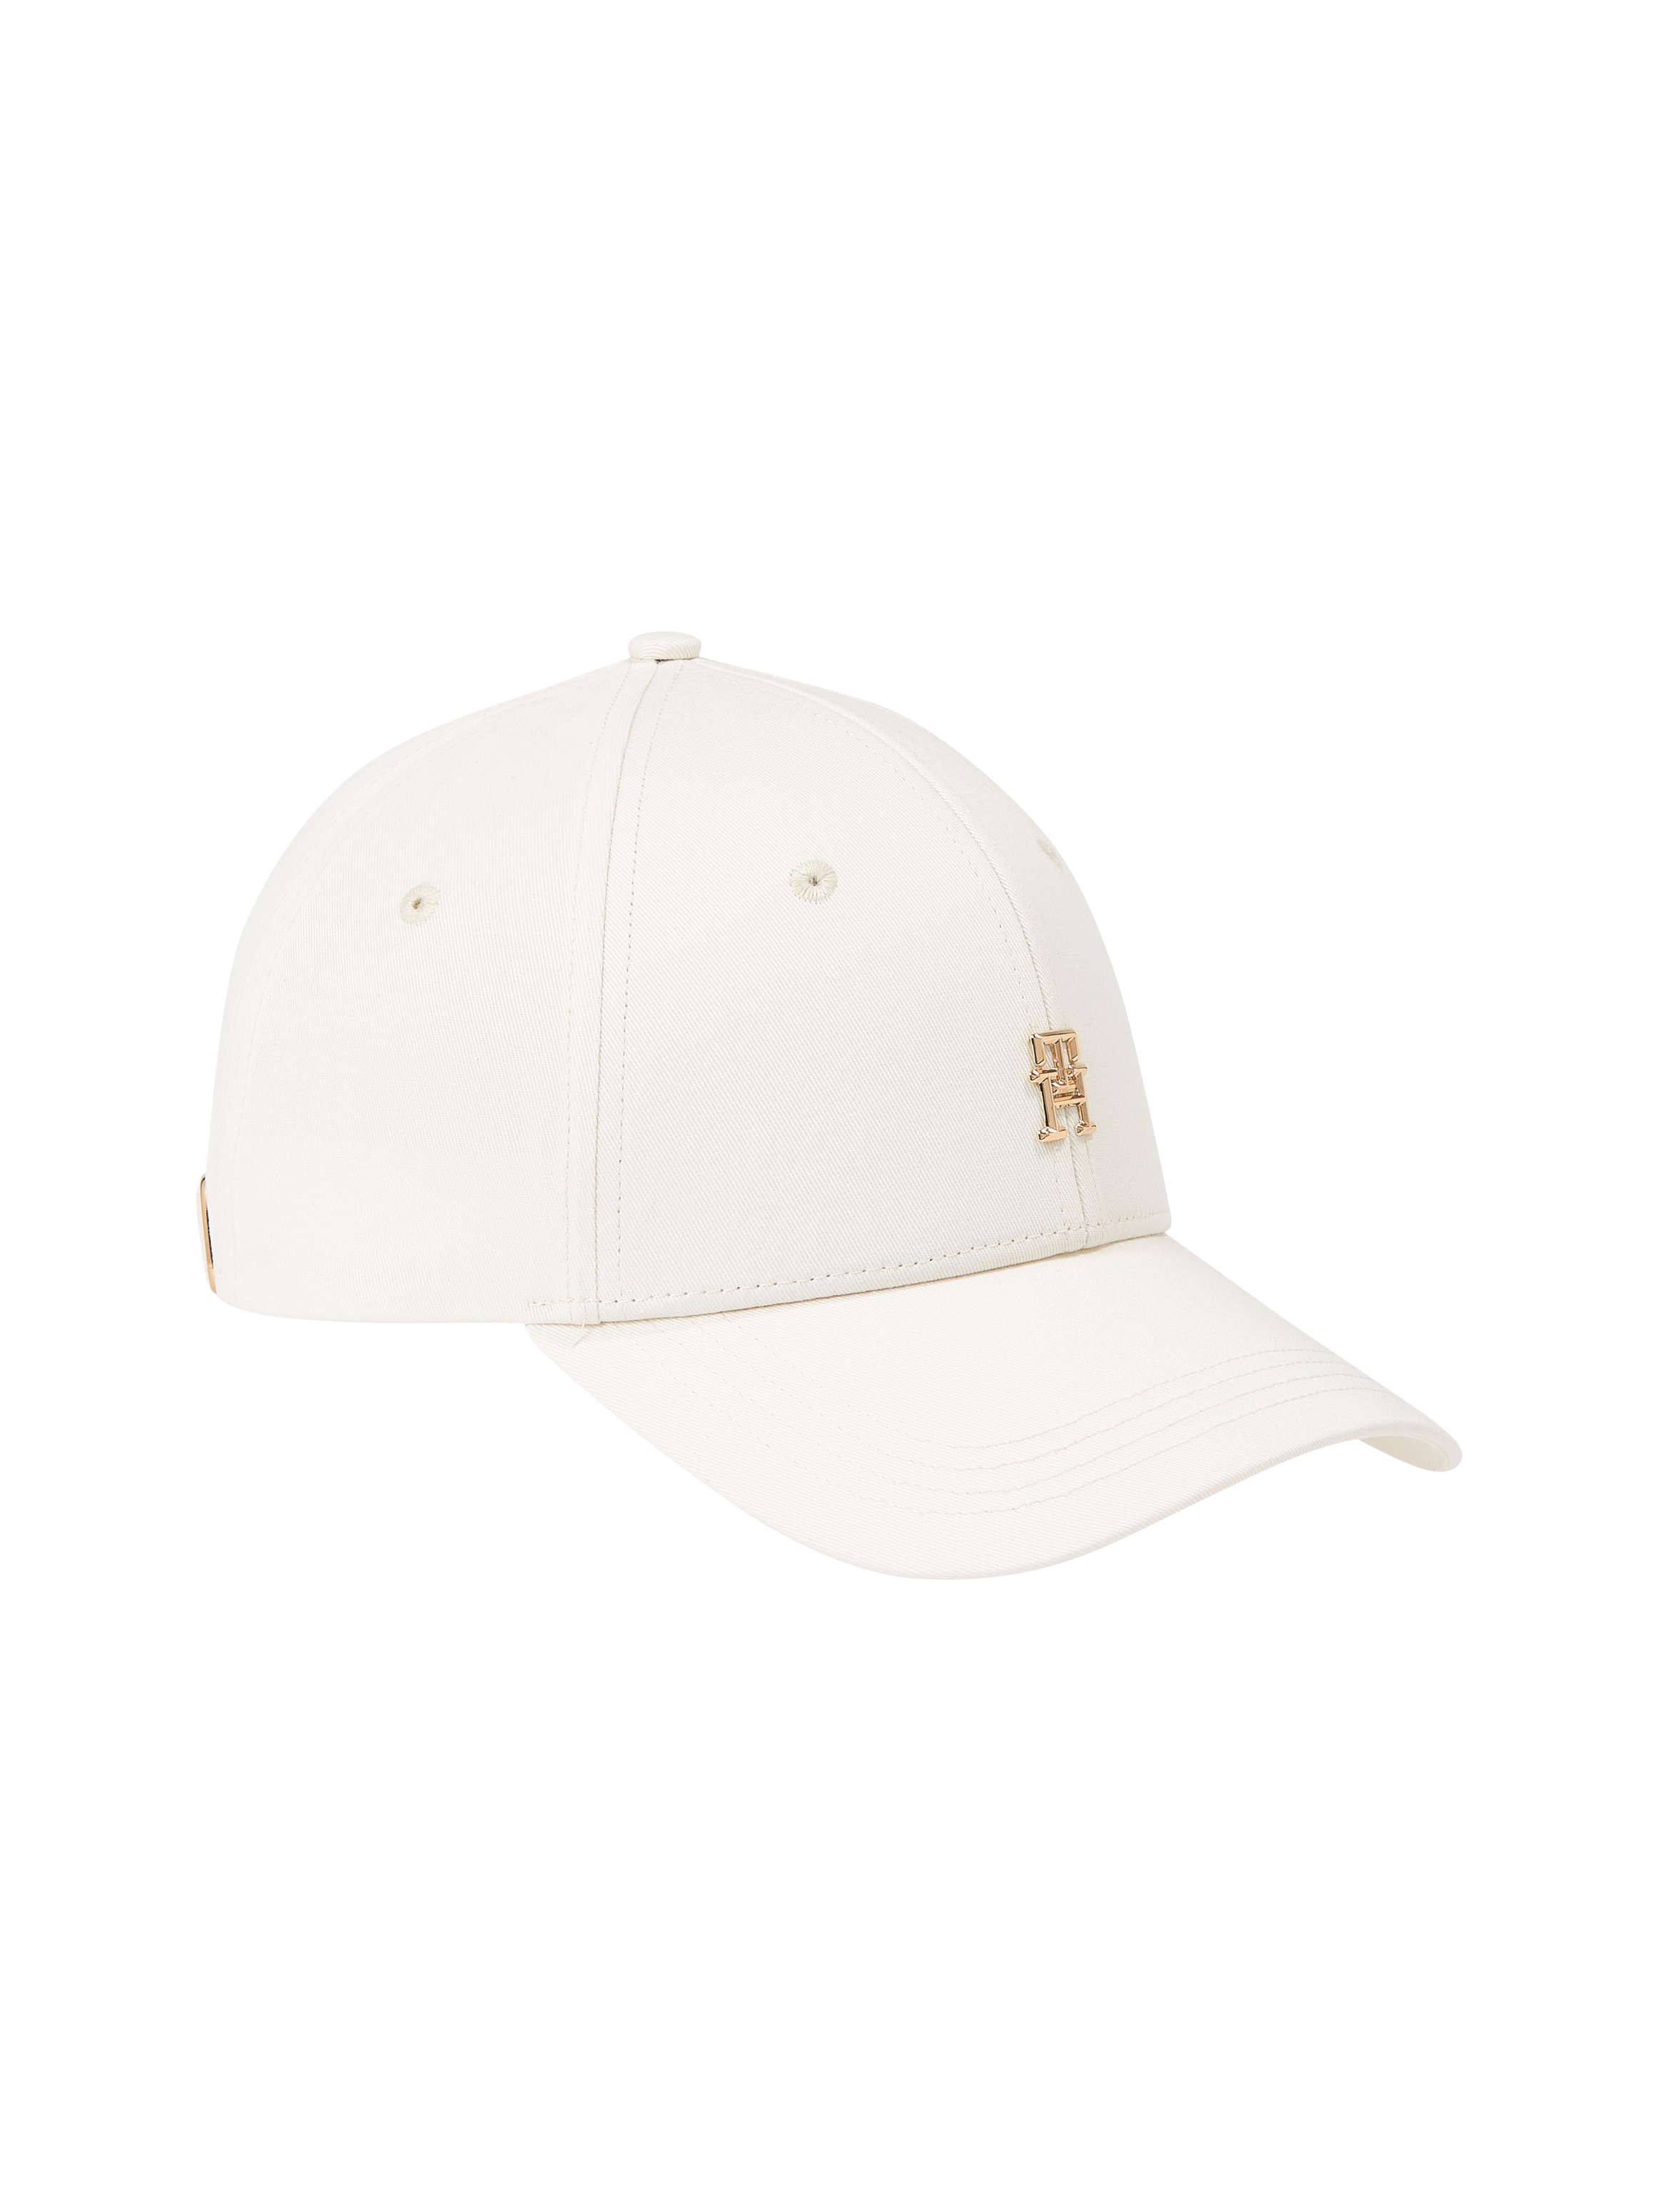 Tommy Hilfiger Baseball Logo-Pin »ESSENTIAL mit goldfarbenen bei CAP«, Cap CHIC